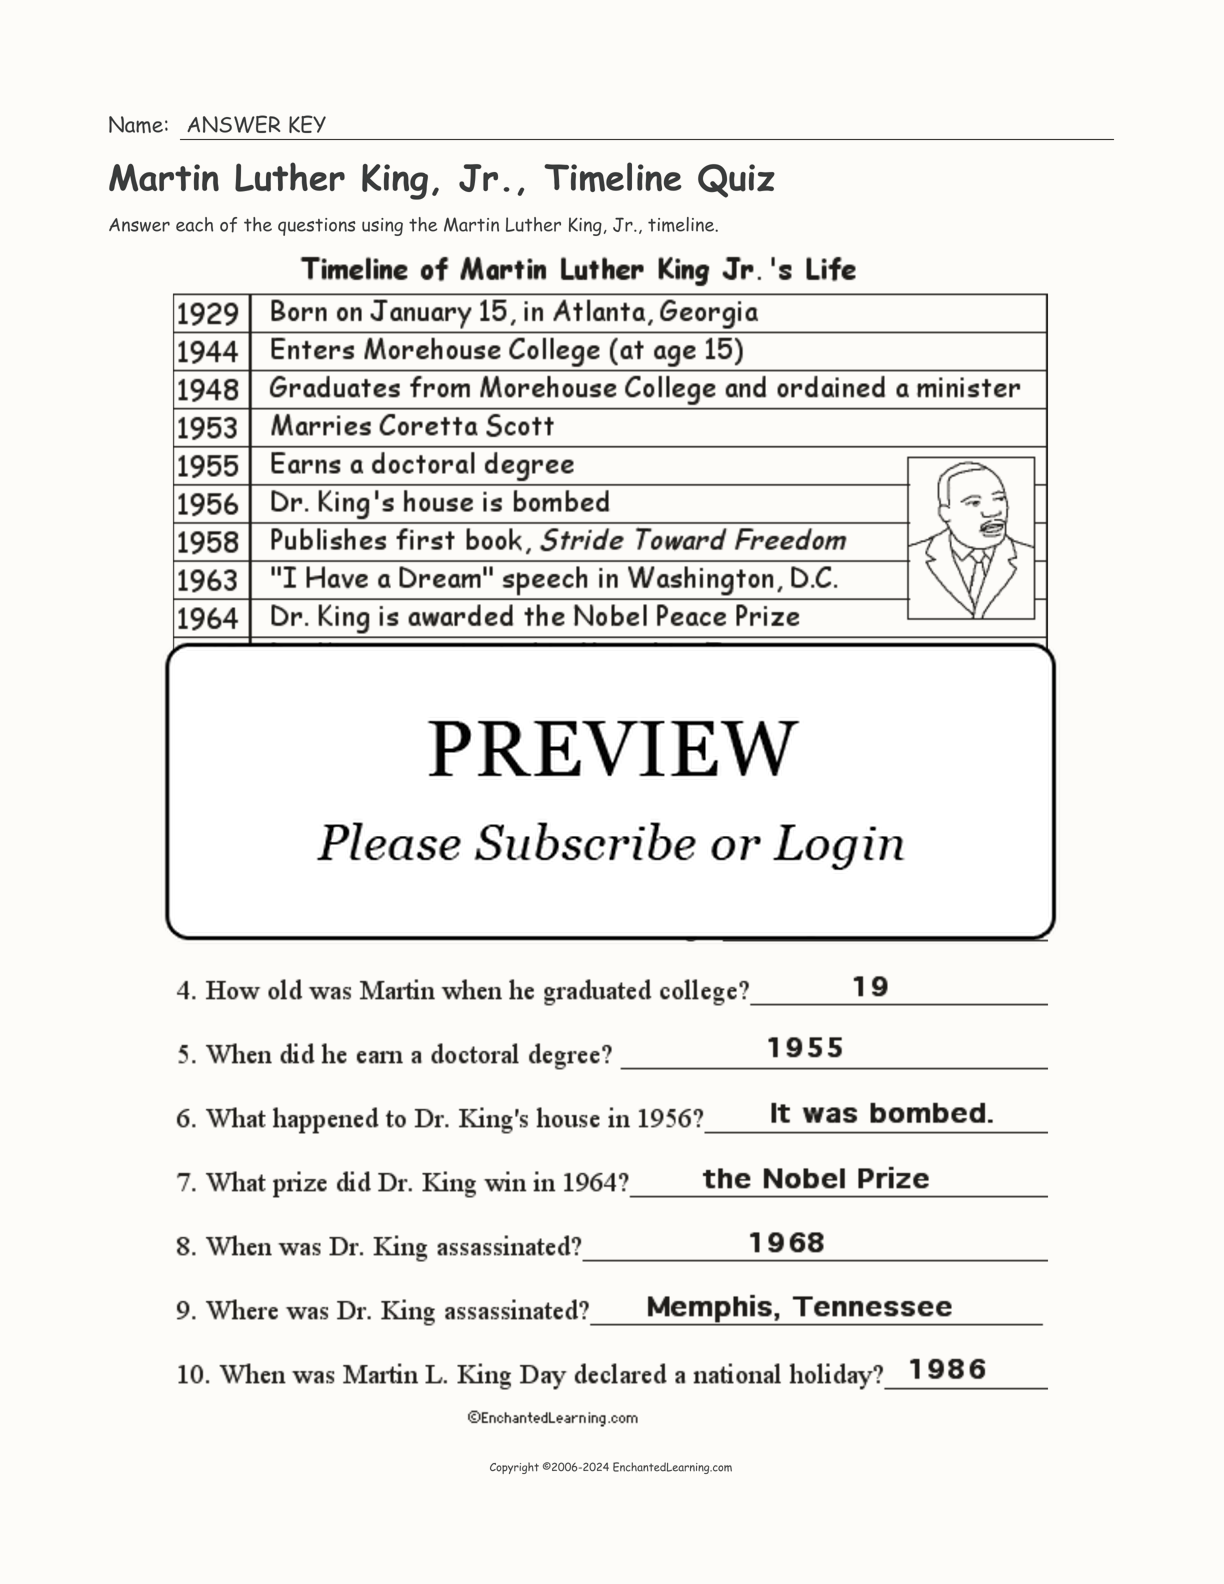 Martin Luther King, Jr., Timeline Quiz interactive worksheet page 2